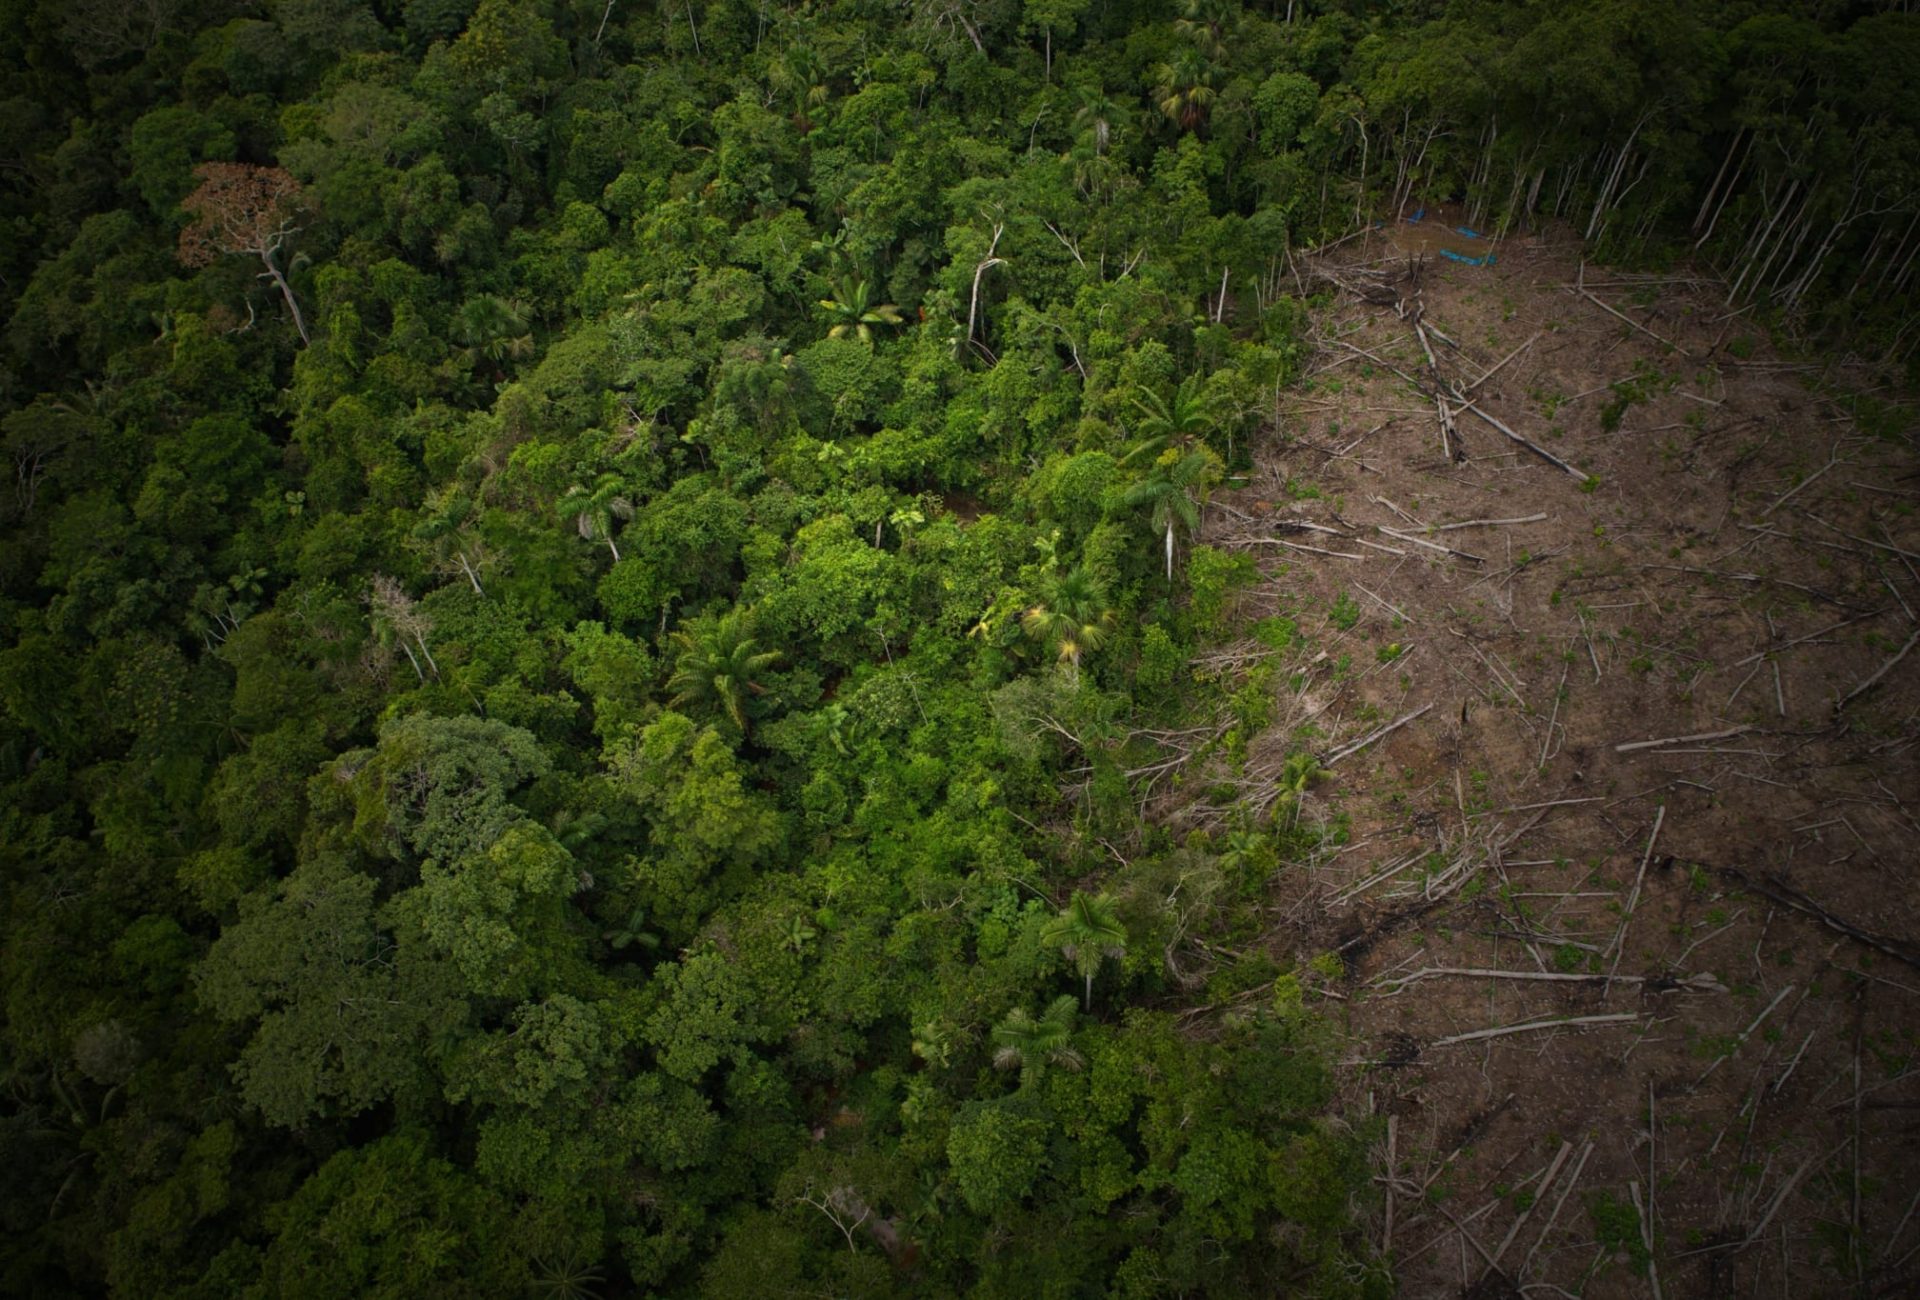 https://www.rainforesttrust.org/app/uploads/2021/10/CHALLENGES-Deforestation_Photo-by-Rainforest-Trust-aspect-ratio-1920-1300-3.jpg